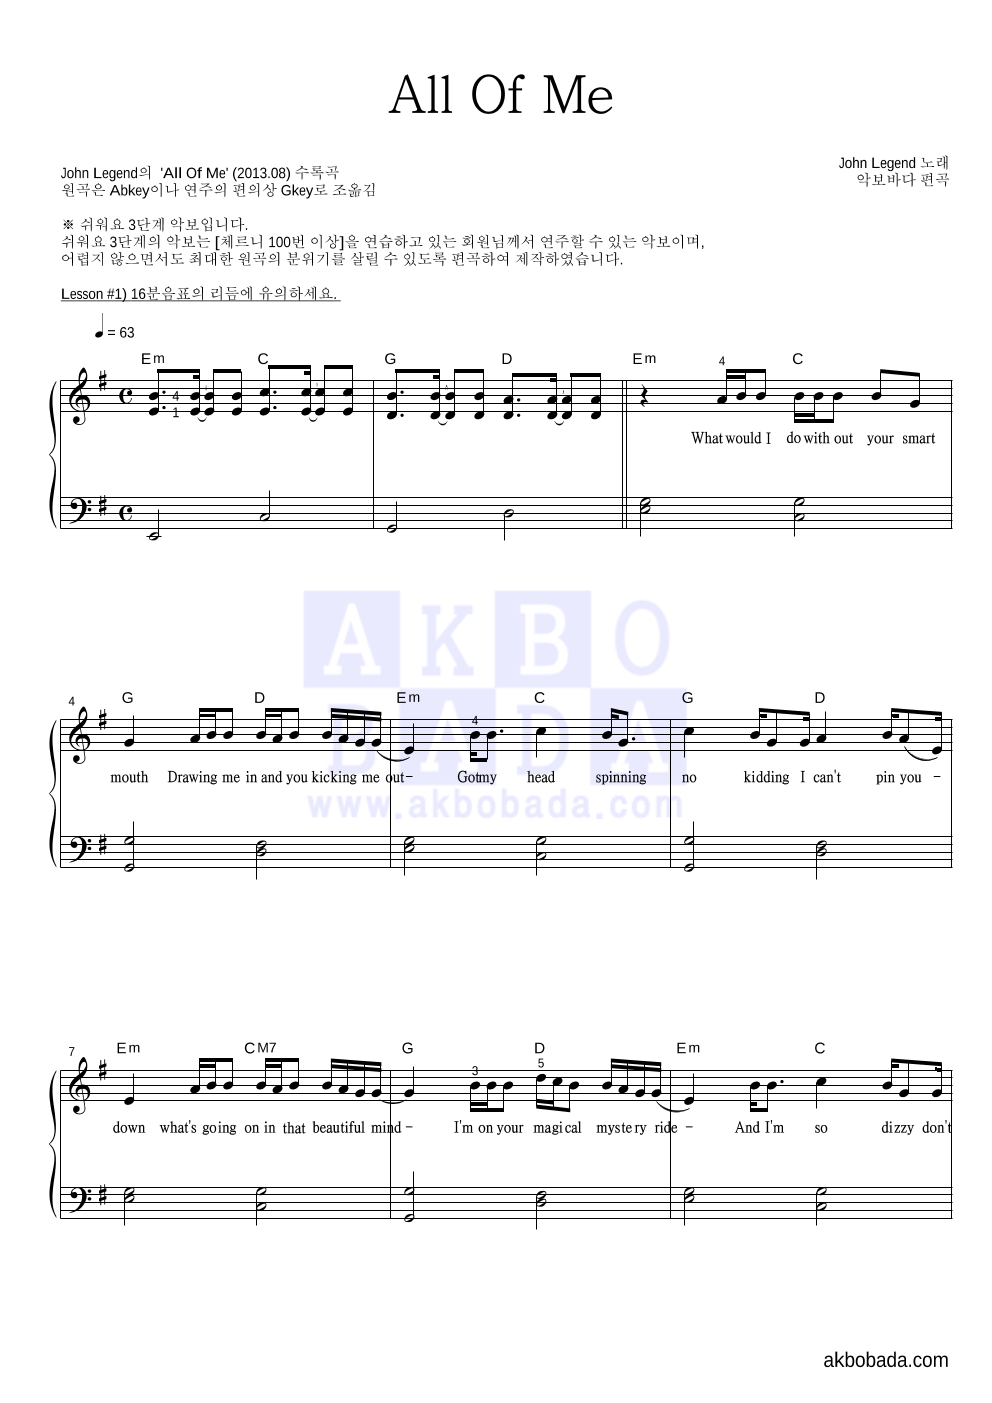 John Legend - All Of Me 피아노2단-쉬워요 악보 